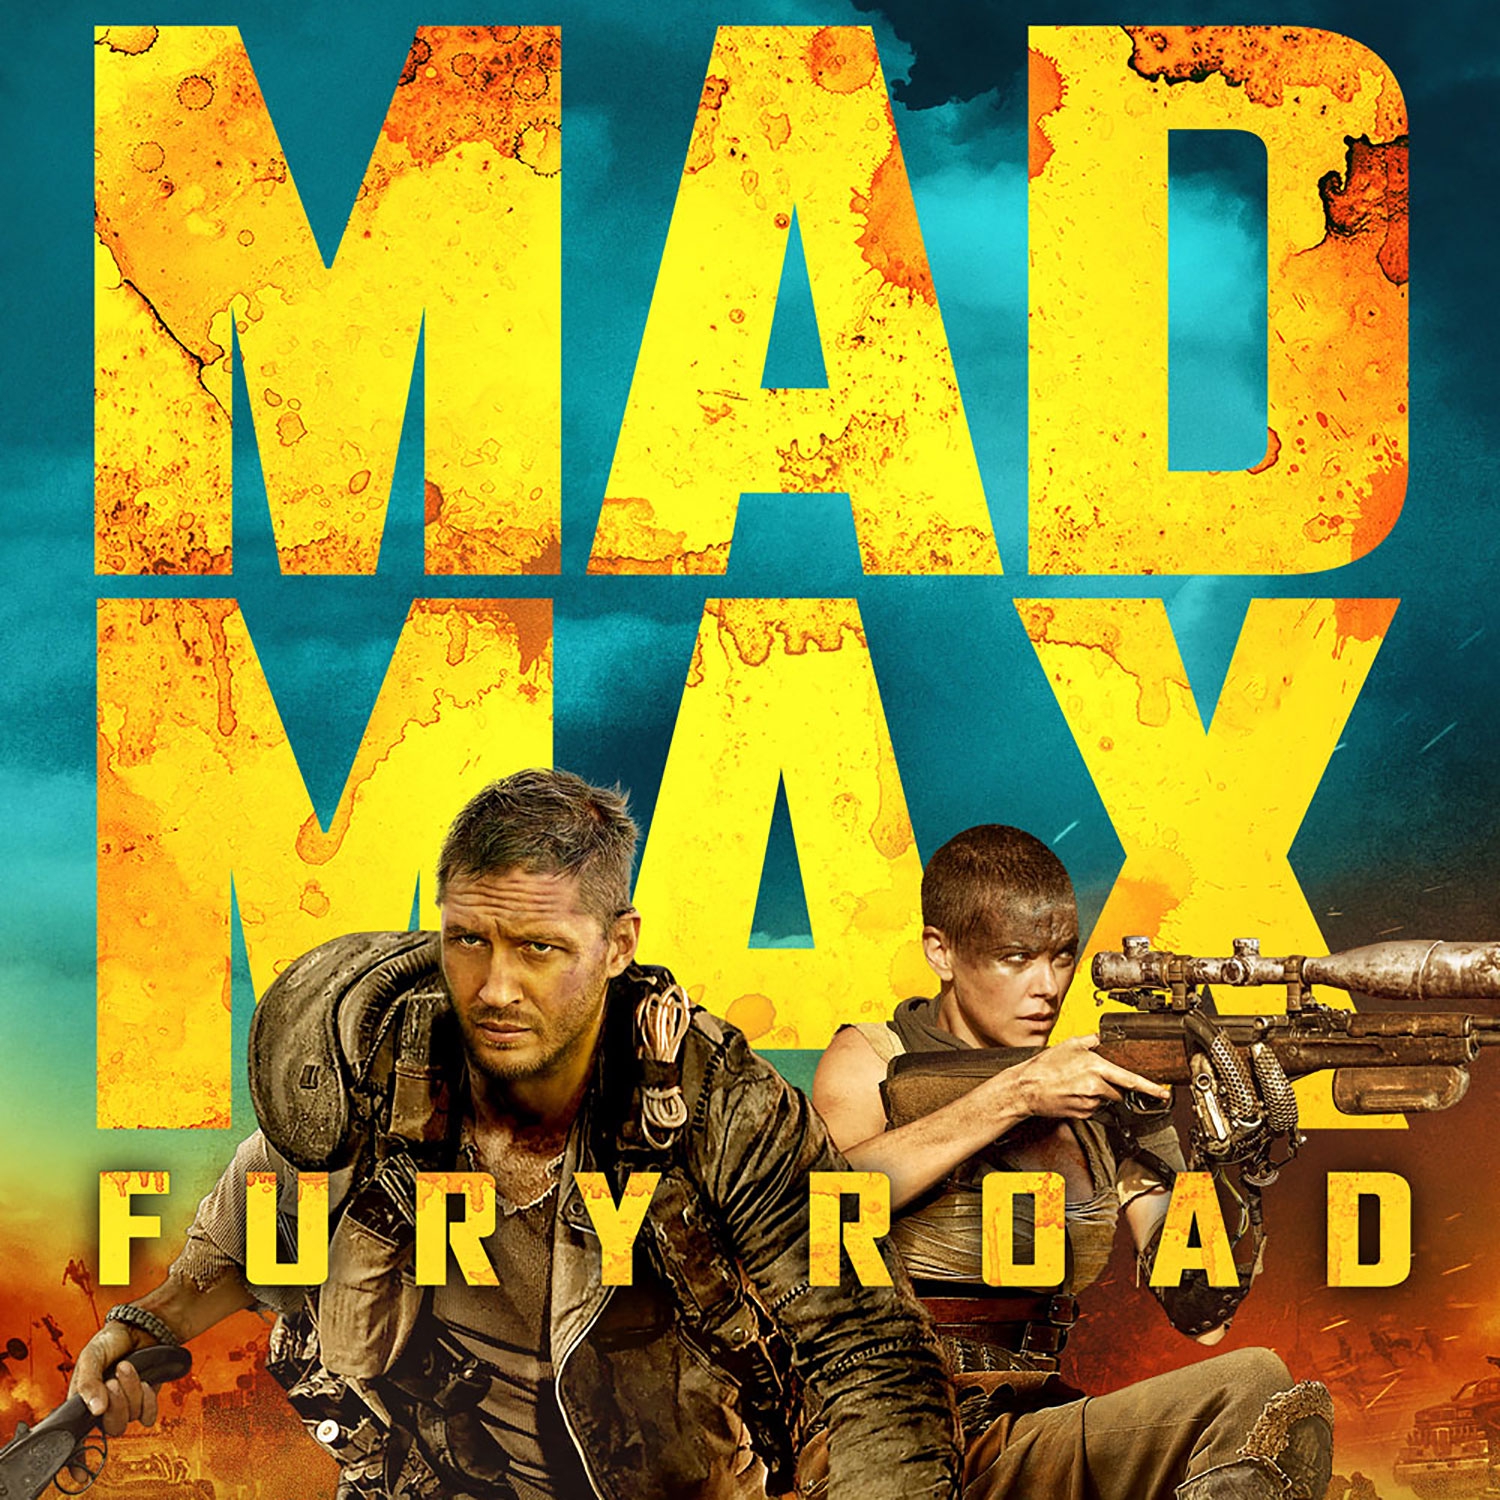 mad max fury road free stream 2014 putlock